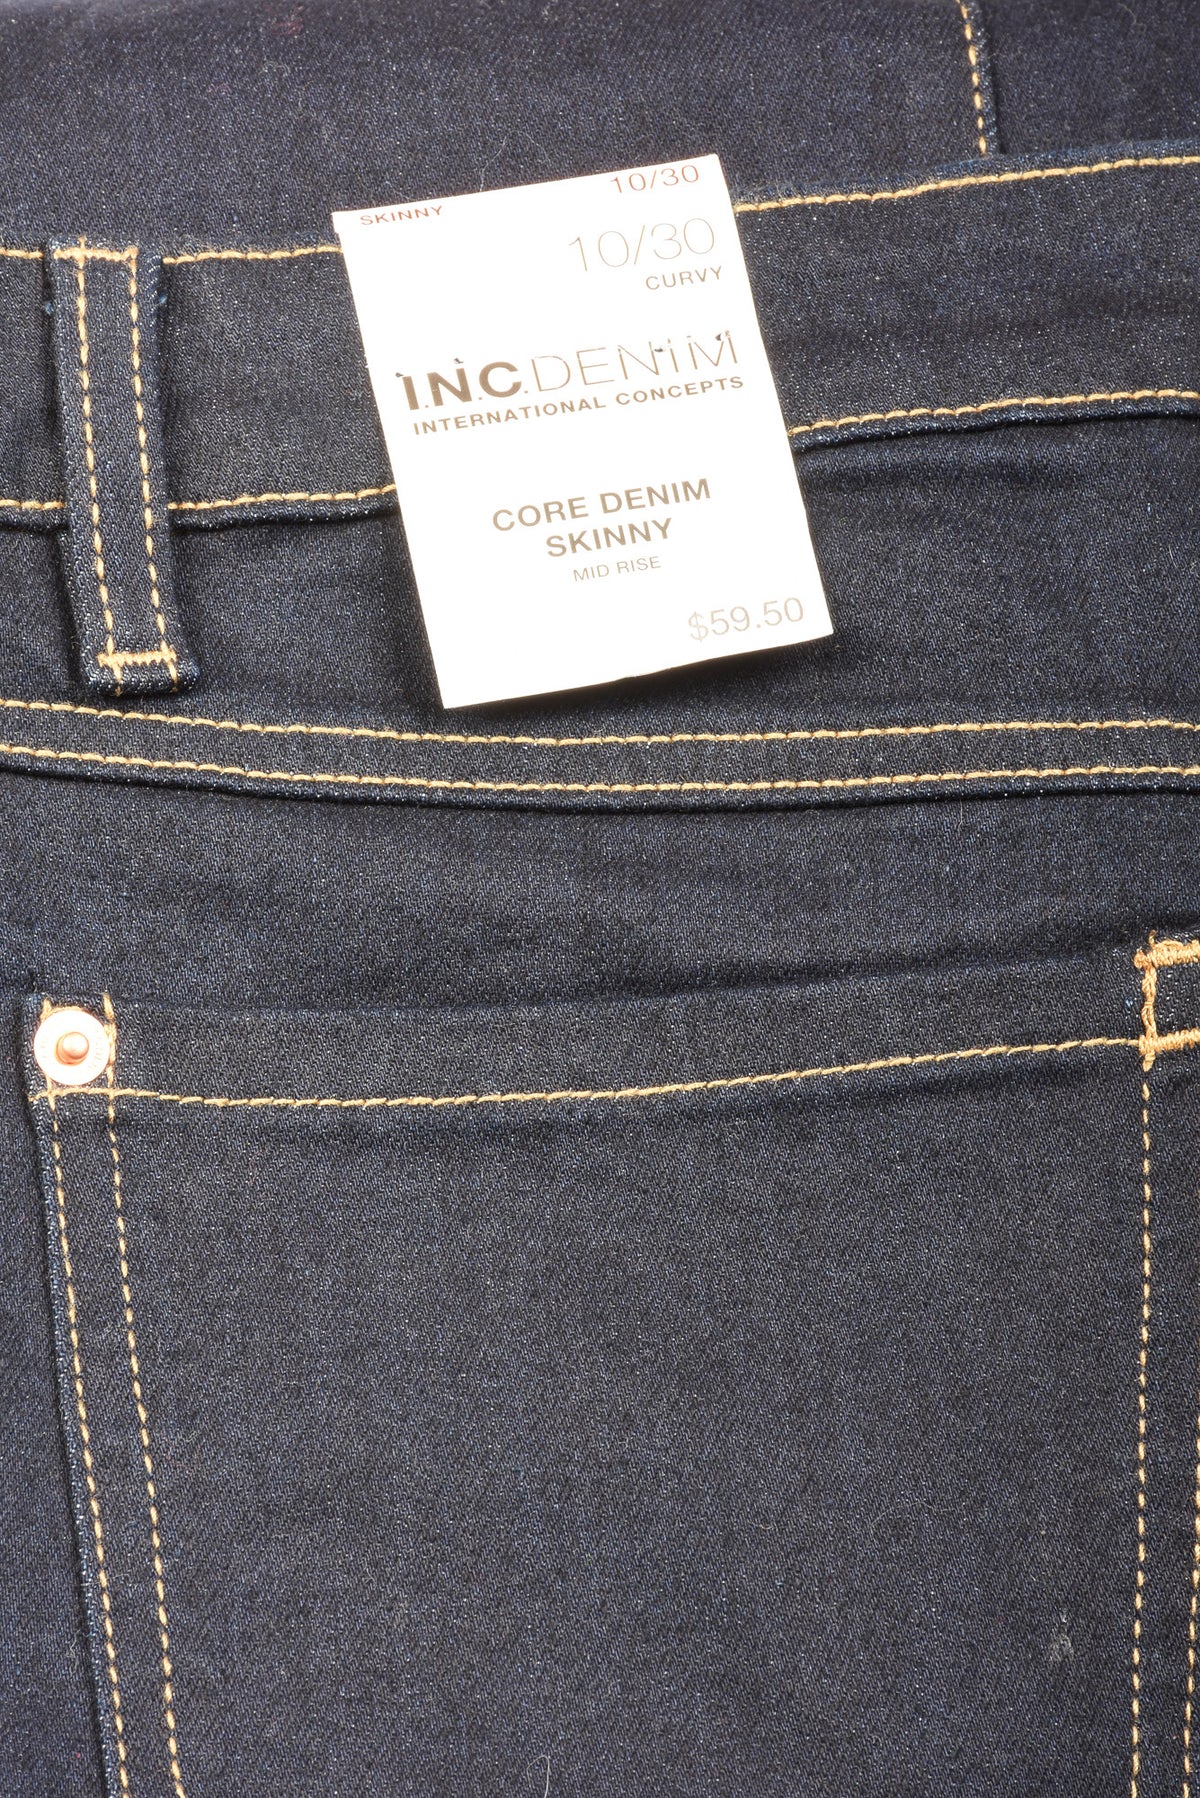 INC International Concepts Jeans | Mercari